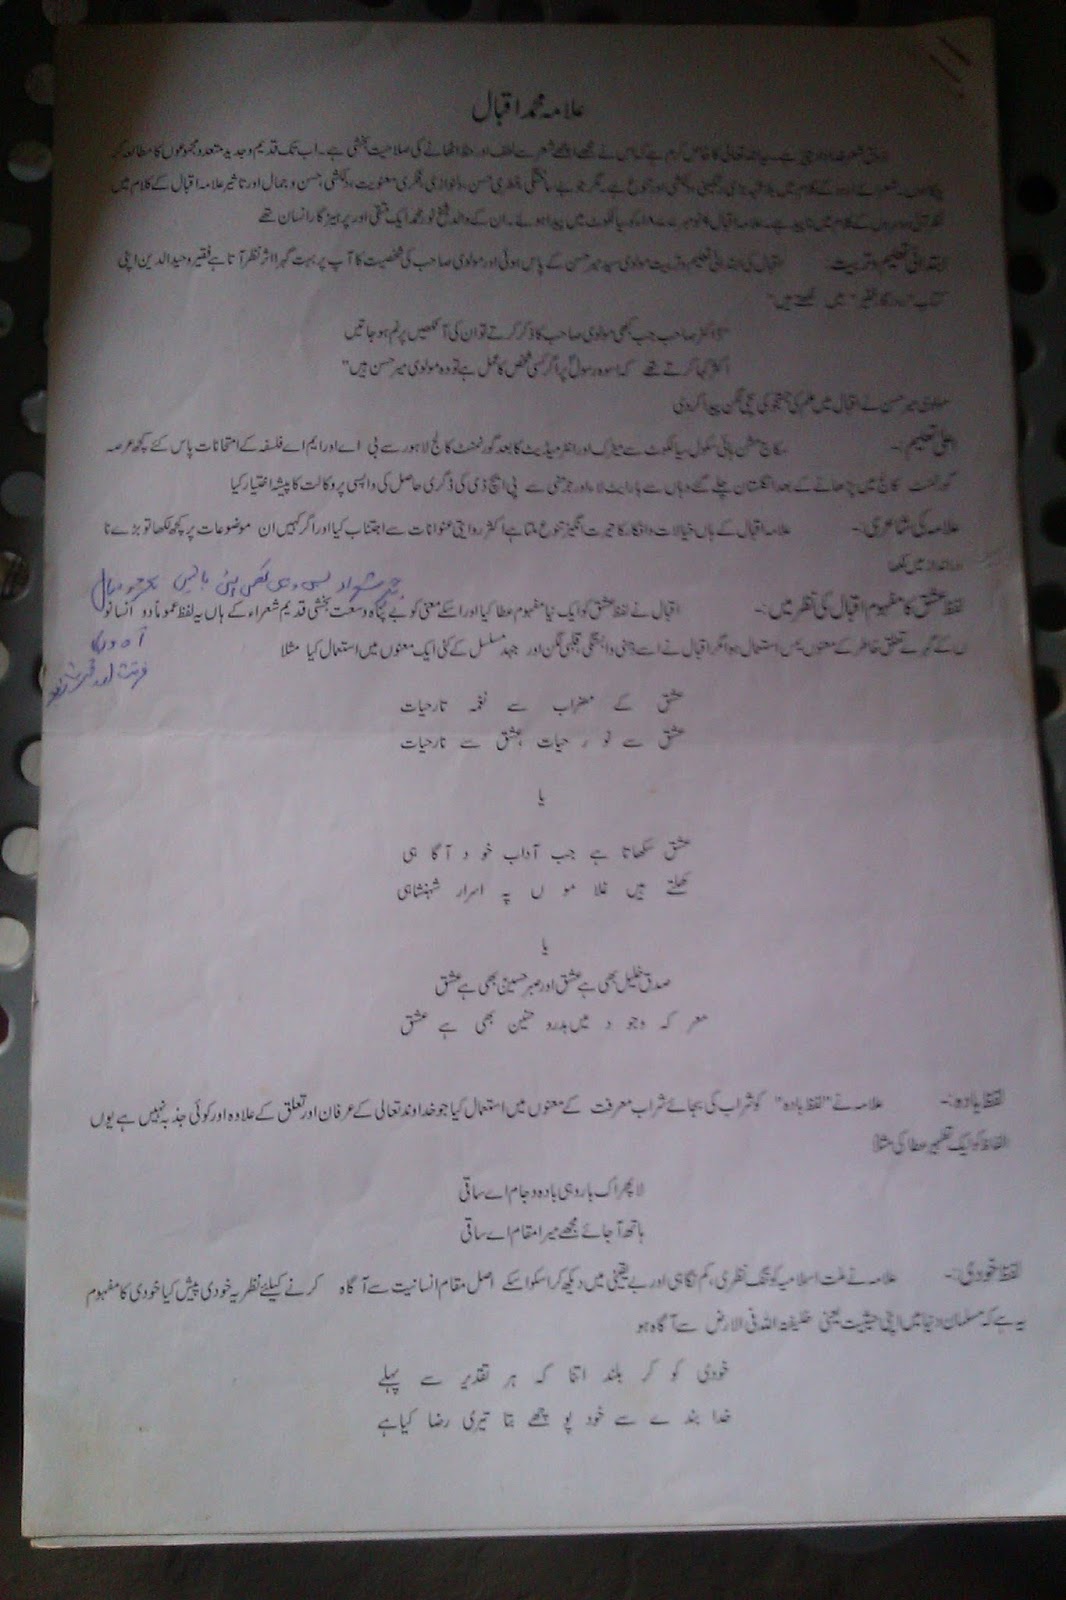 Essay On Allama Iqbal In Urdu With Headings Telegraph